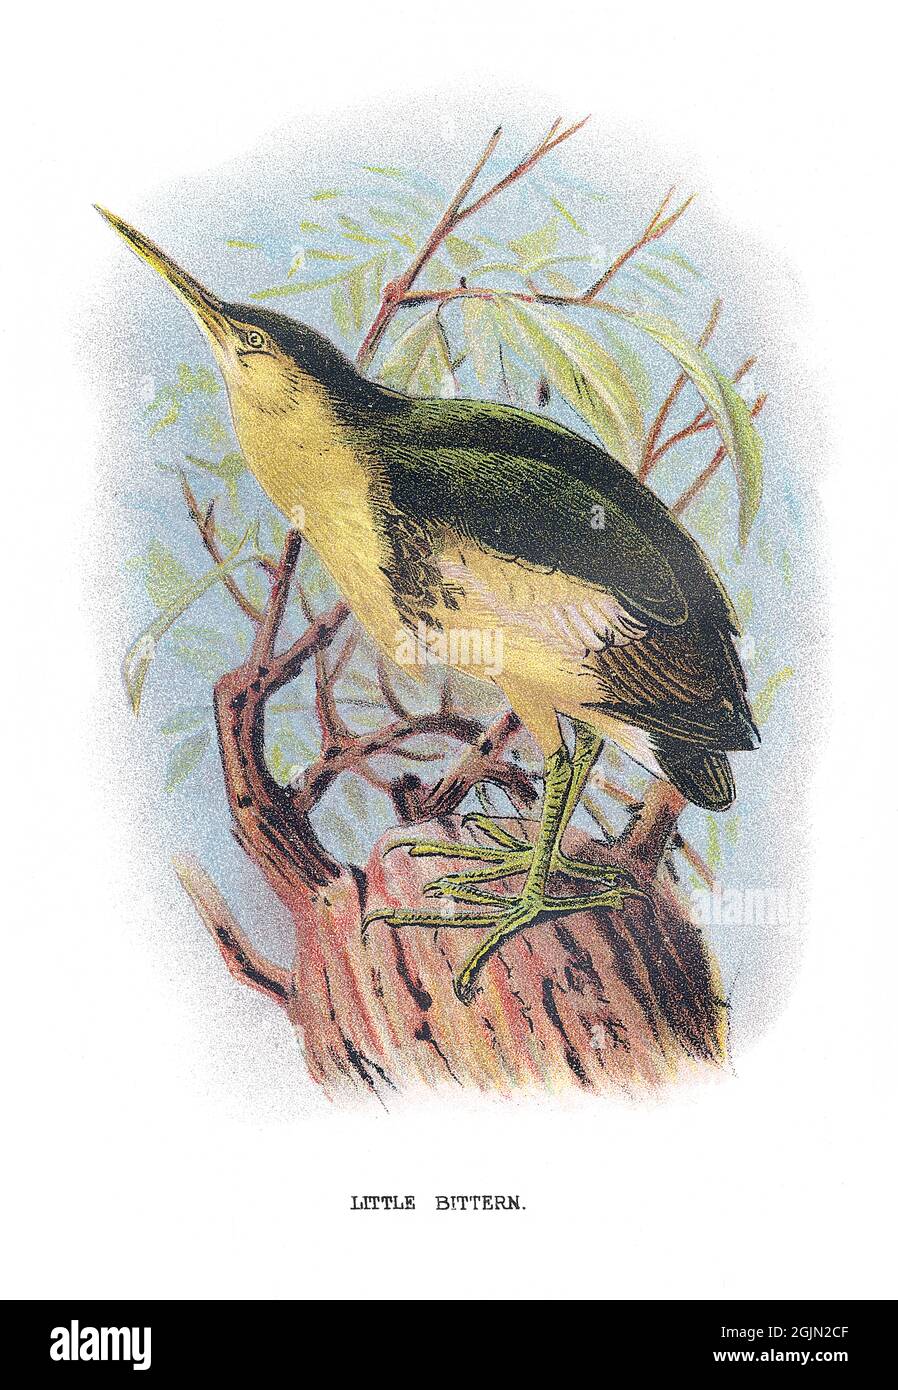 The little bittern or common little bittern, Ixobrychus minutus, is a wading bird in the heron family, Ardeidae. Stock Photo